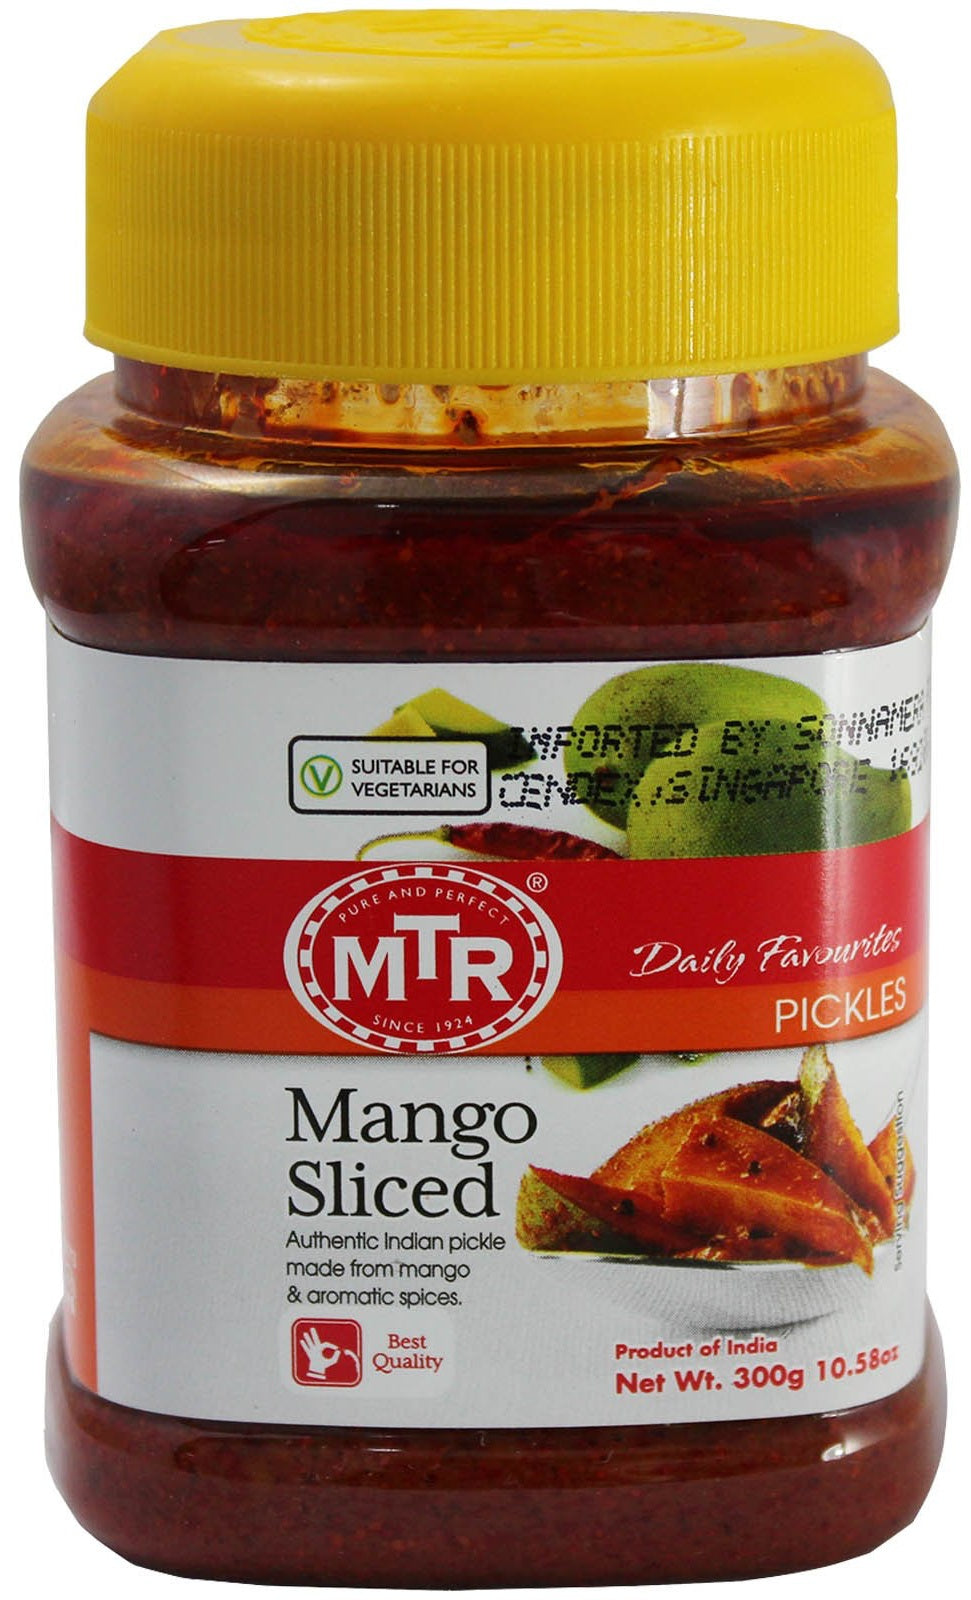 Mango Sliced Pickle